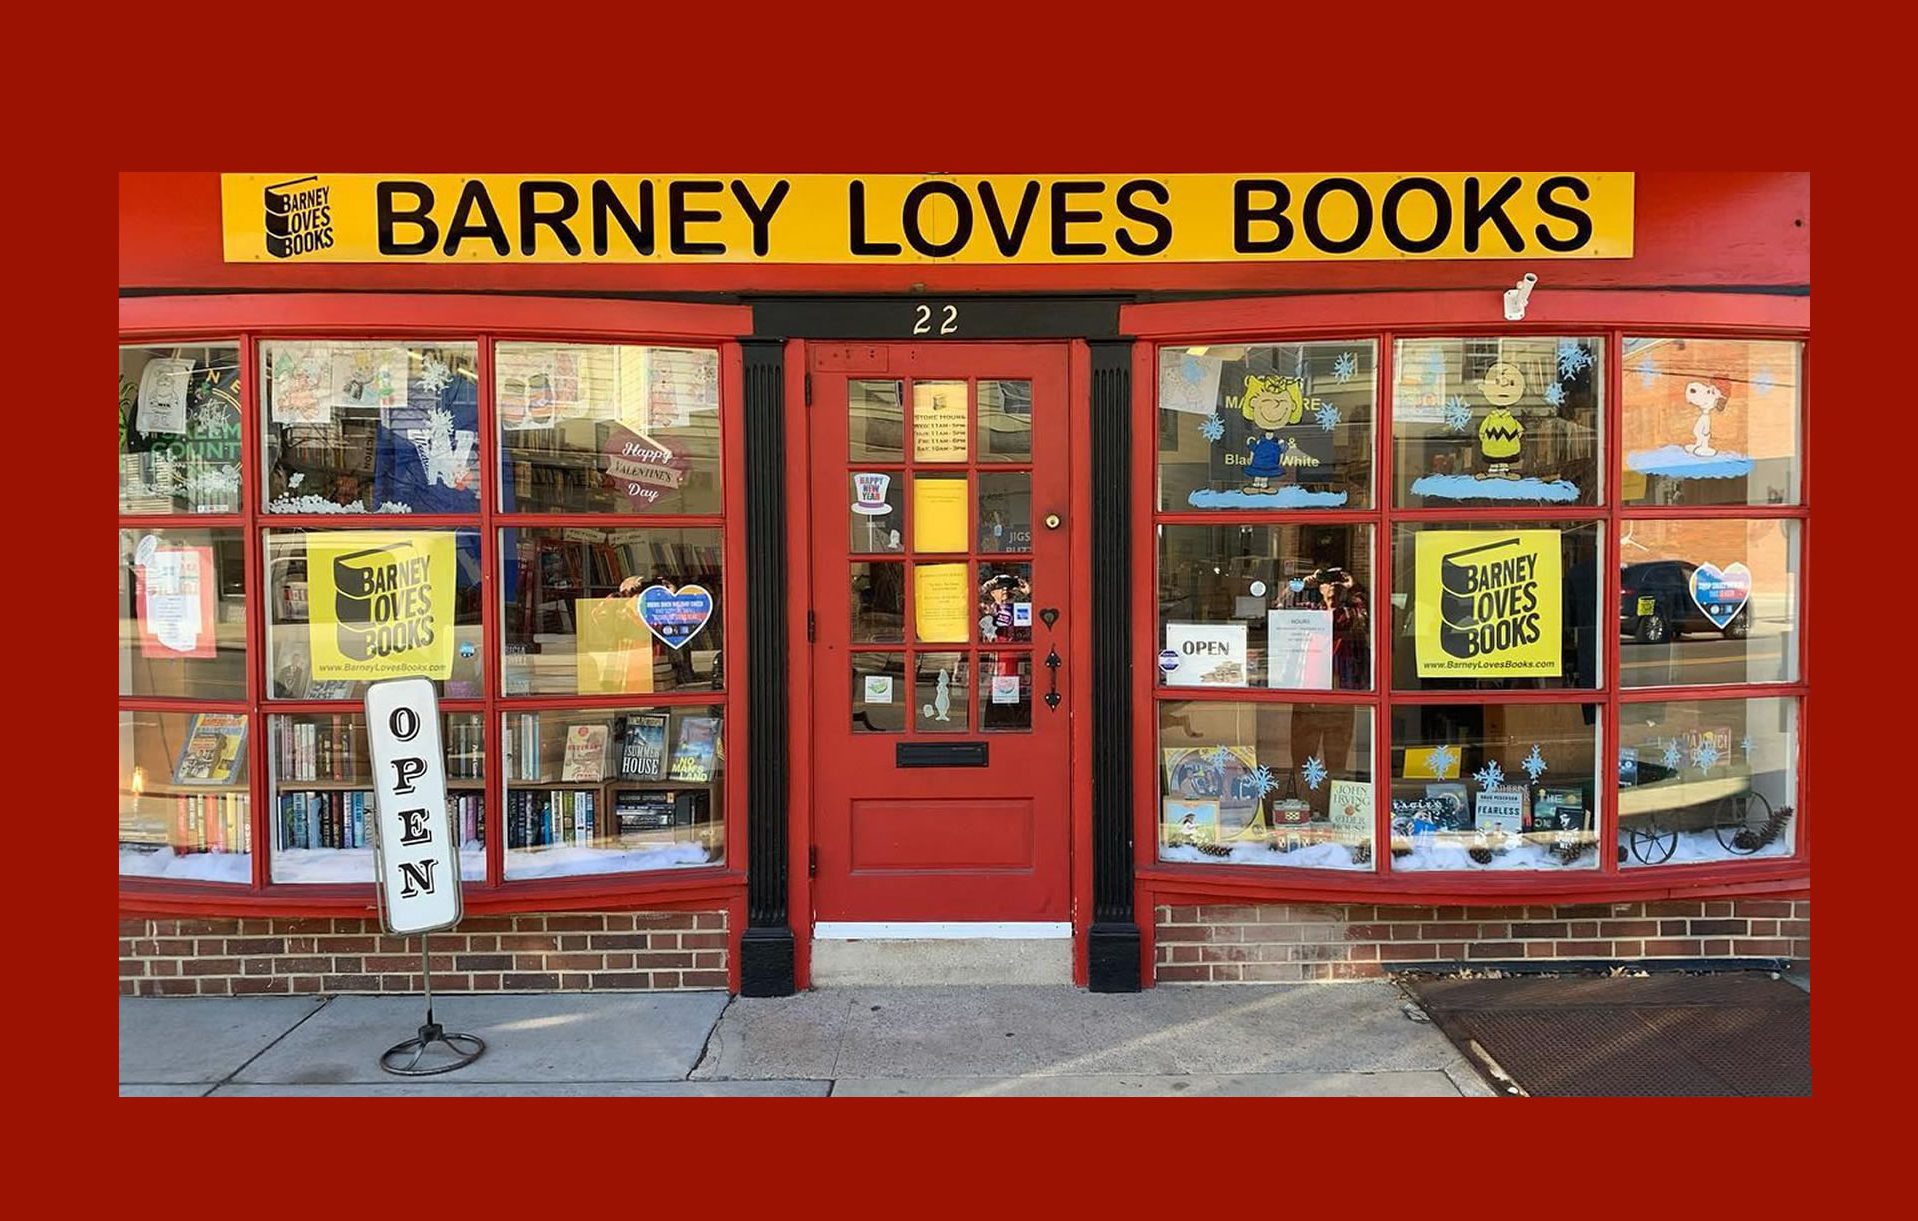 used books at barney loves books